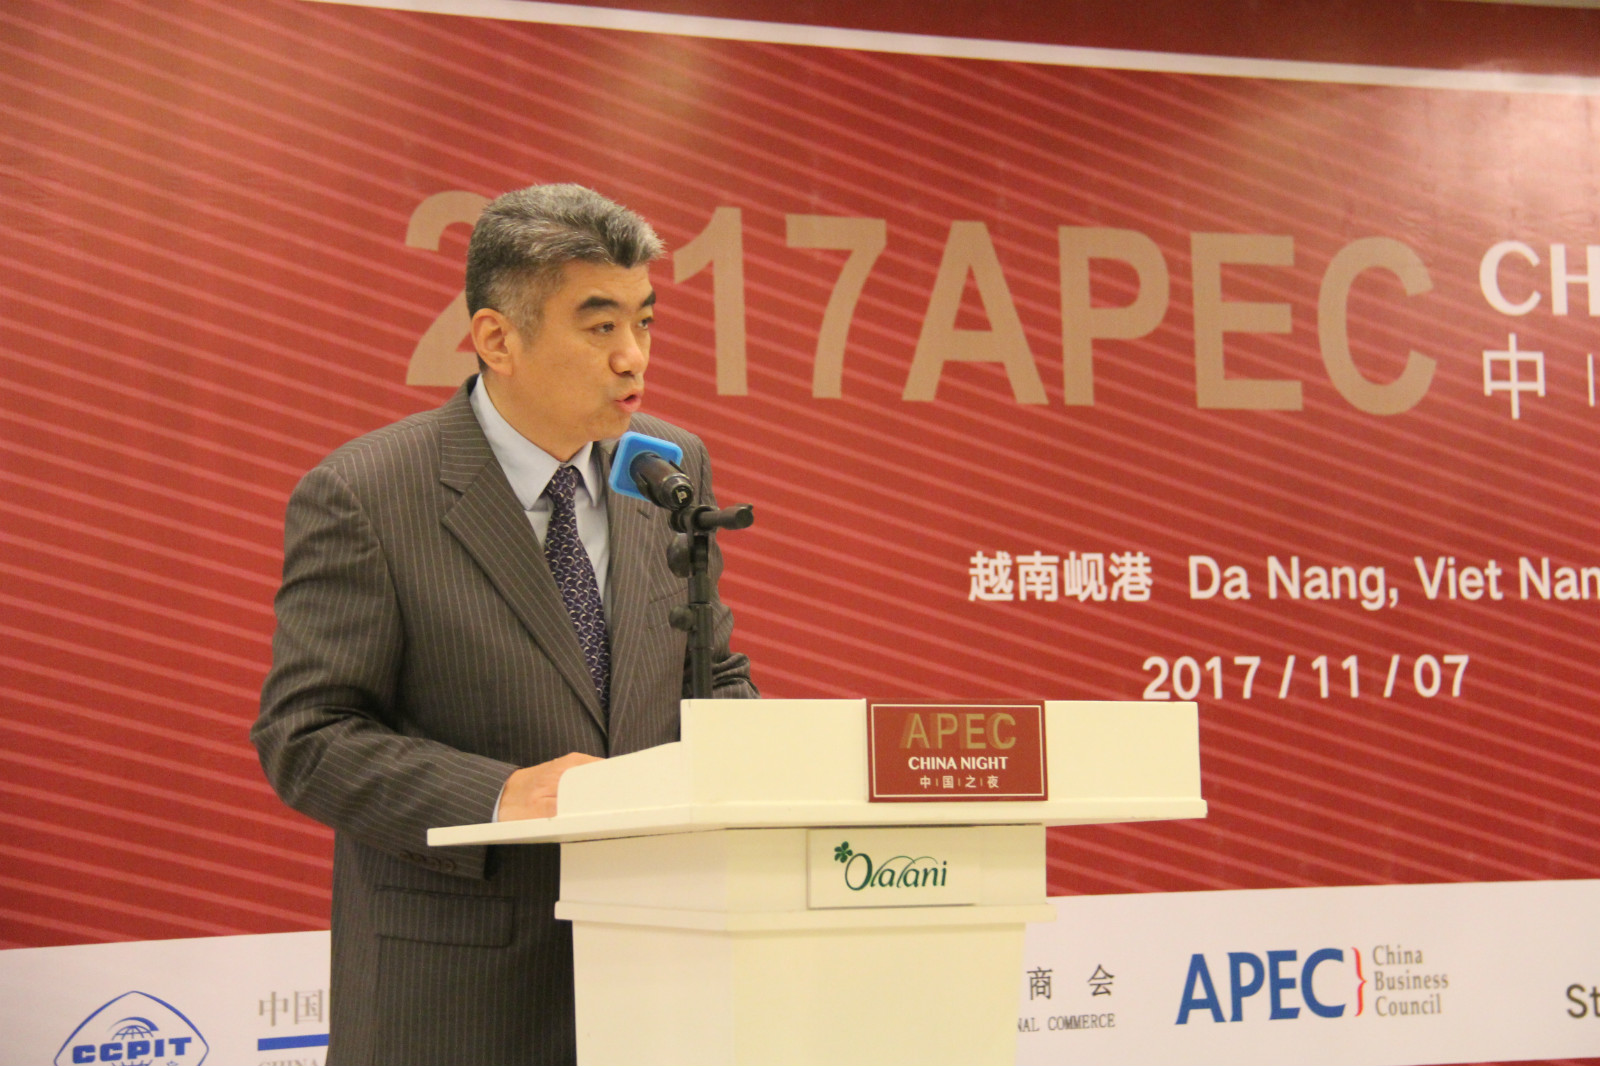 APEC Vietnam 2017 witnesses China growing influence